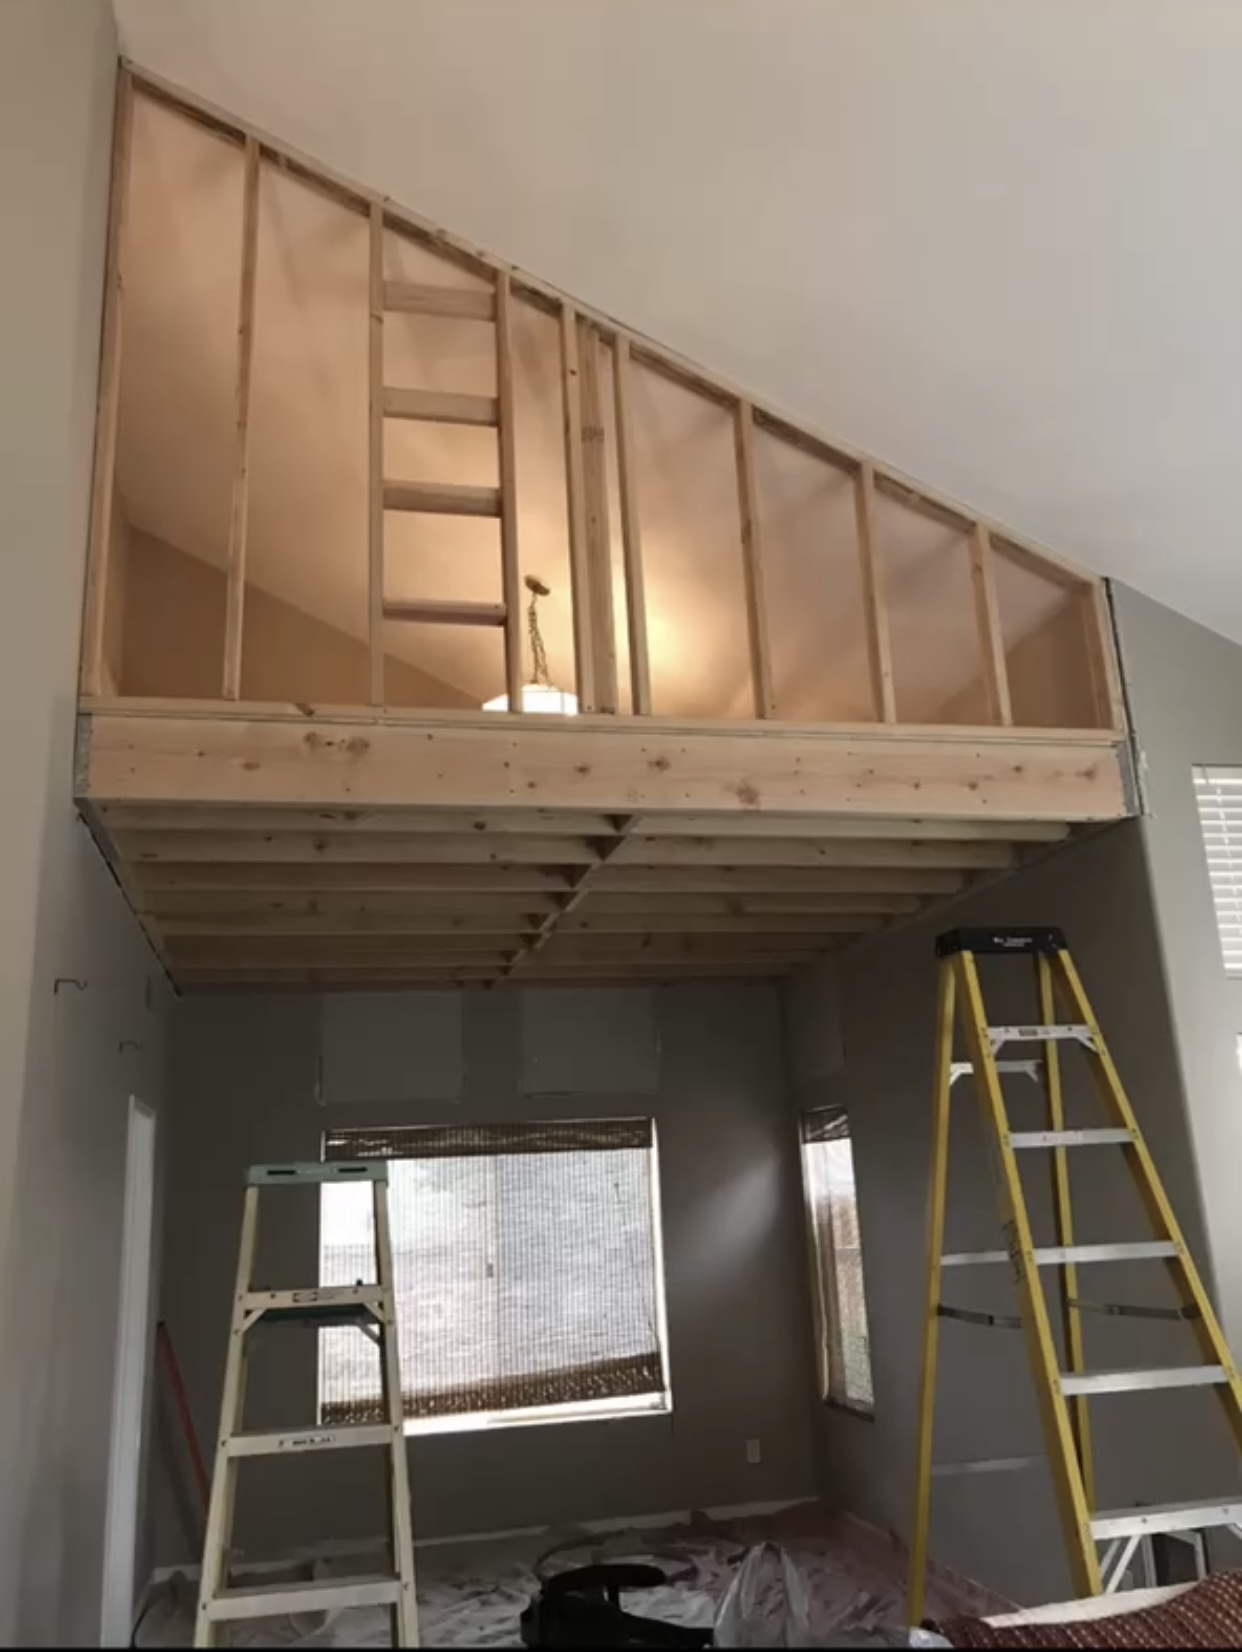 Drop ceiling drywall closer